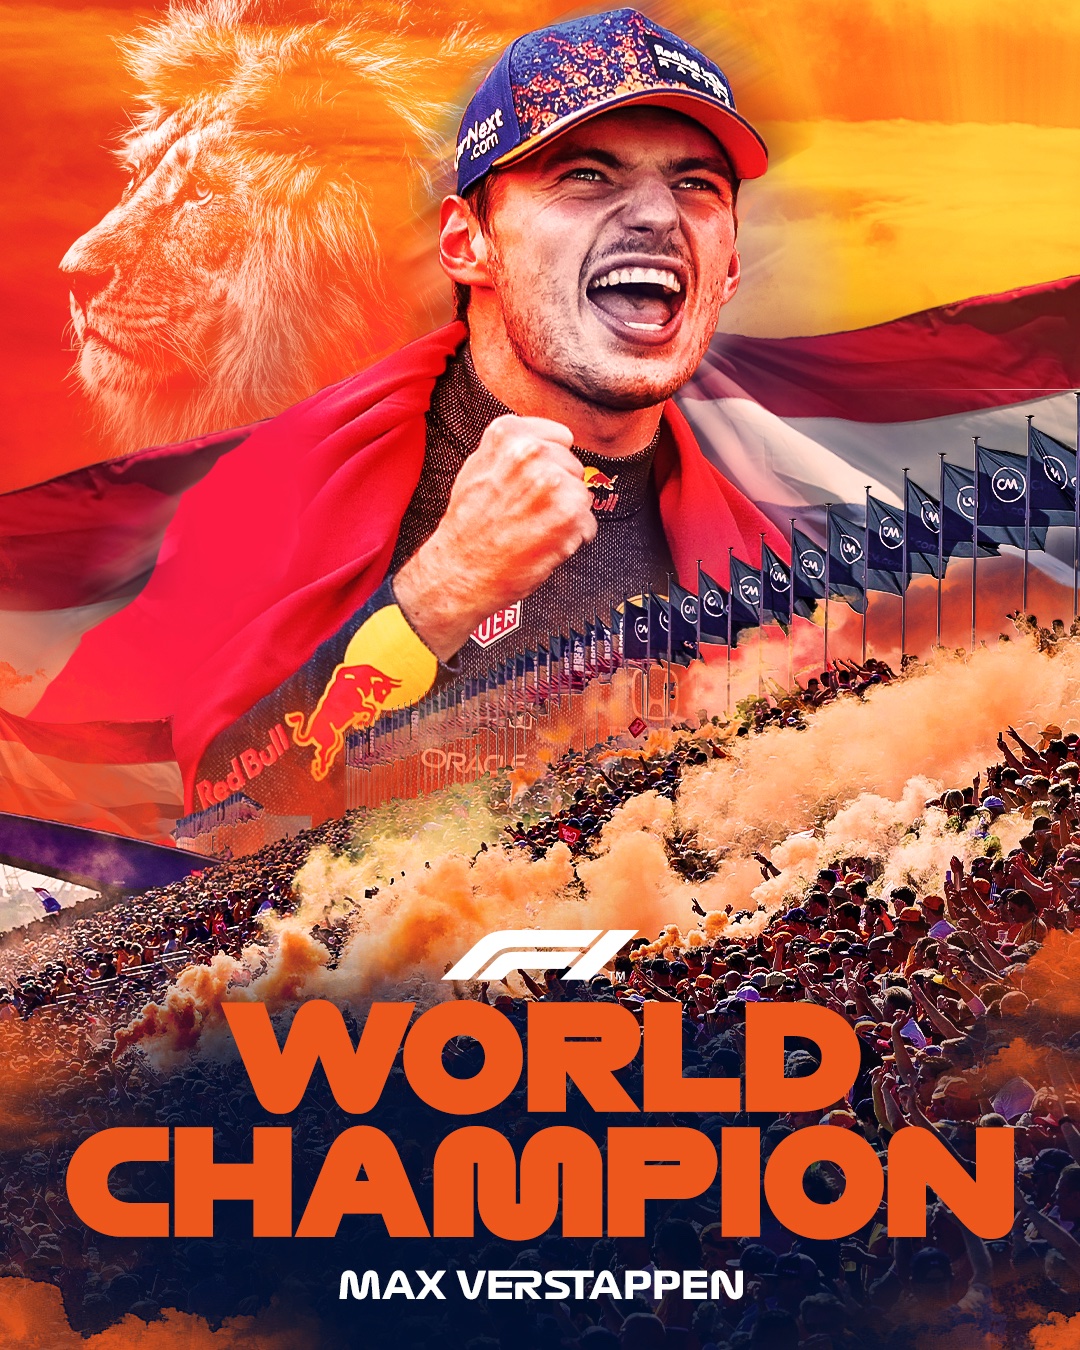 Formula 1 on Twitter: "MAX VERSTAPPEN. WORLD CHAMPION!!! A stunning season  by an extraordinary talent #HistoryMade #F1 @Max33Verstappen  https://t.co/FxT9W69xJe" / Twitter